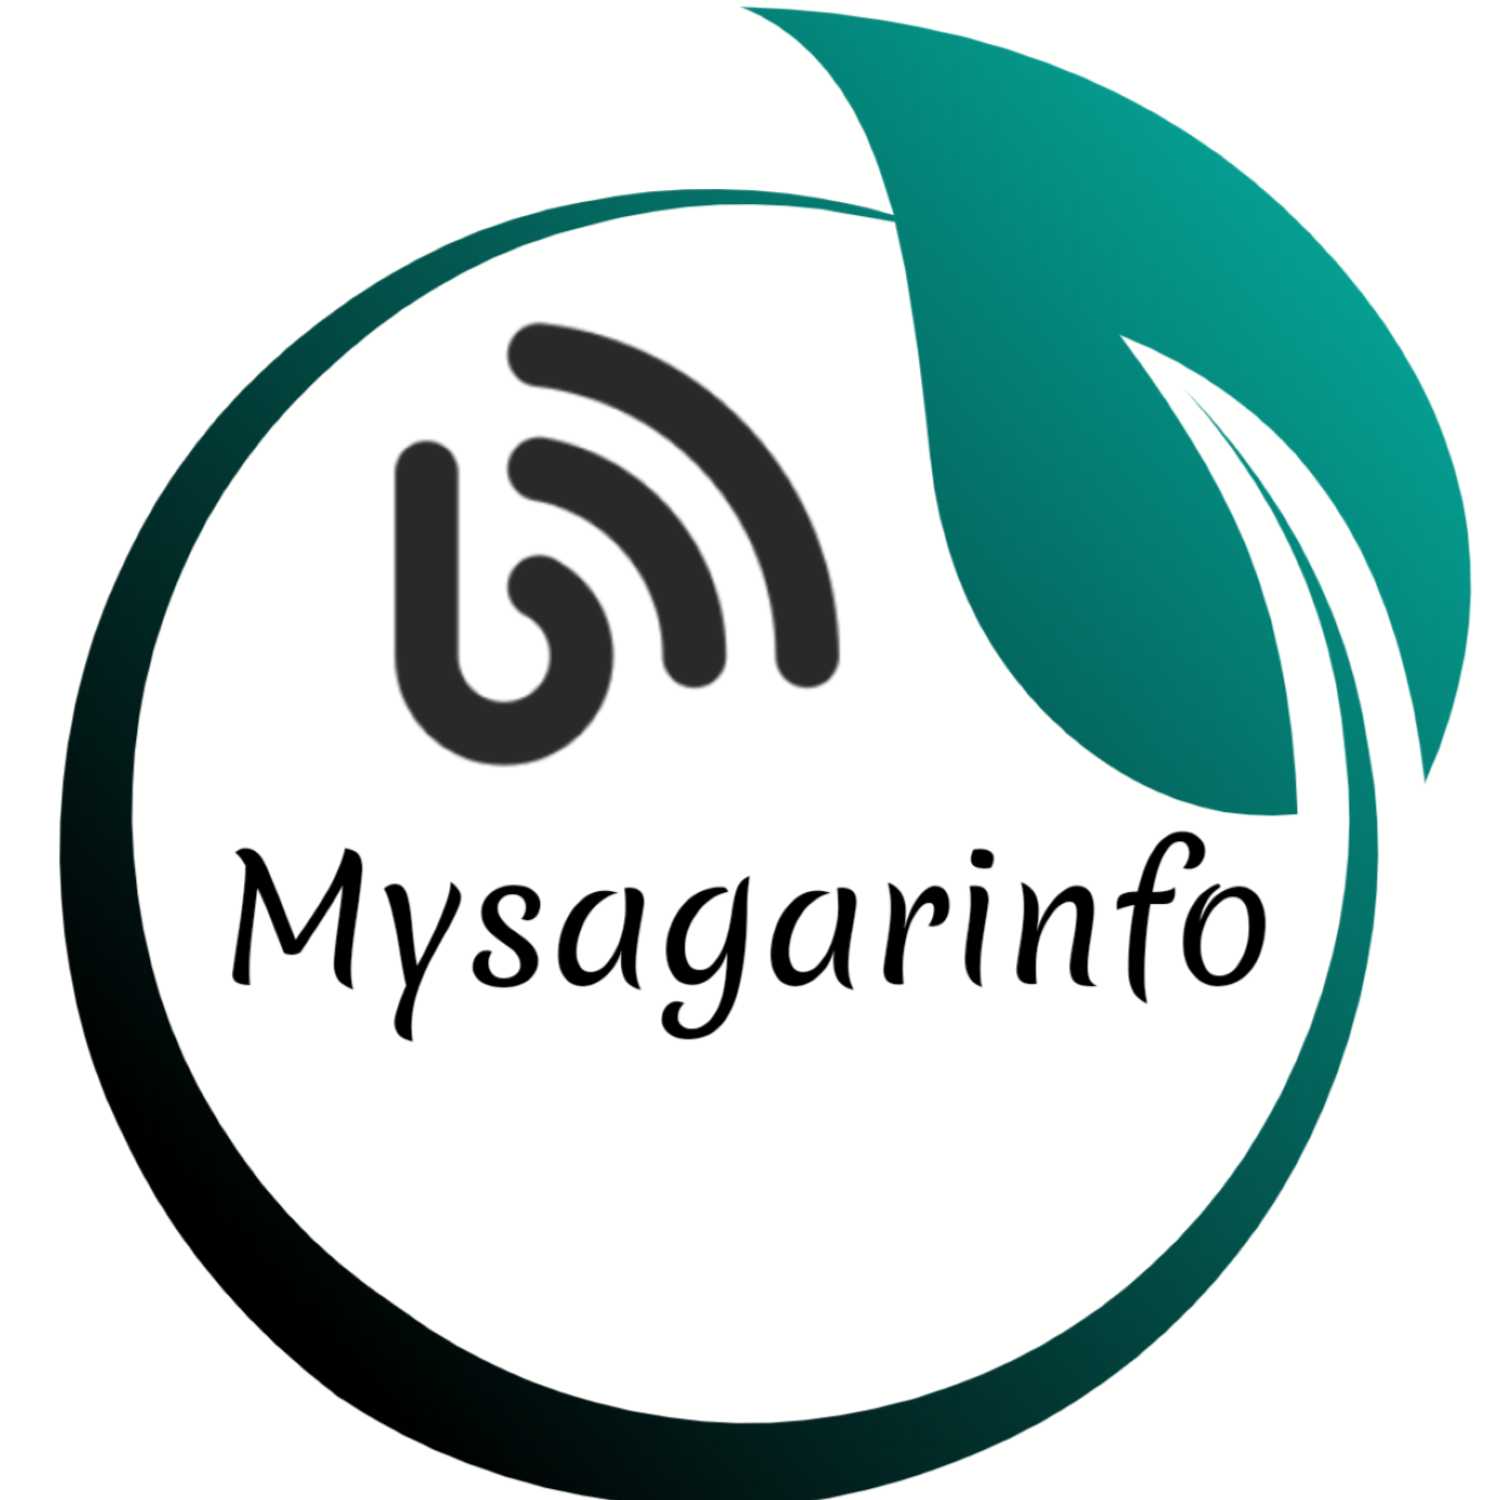 Mysagarinfo